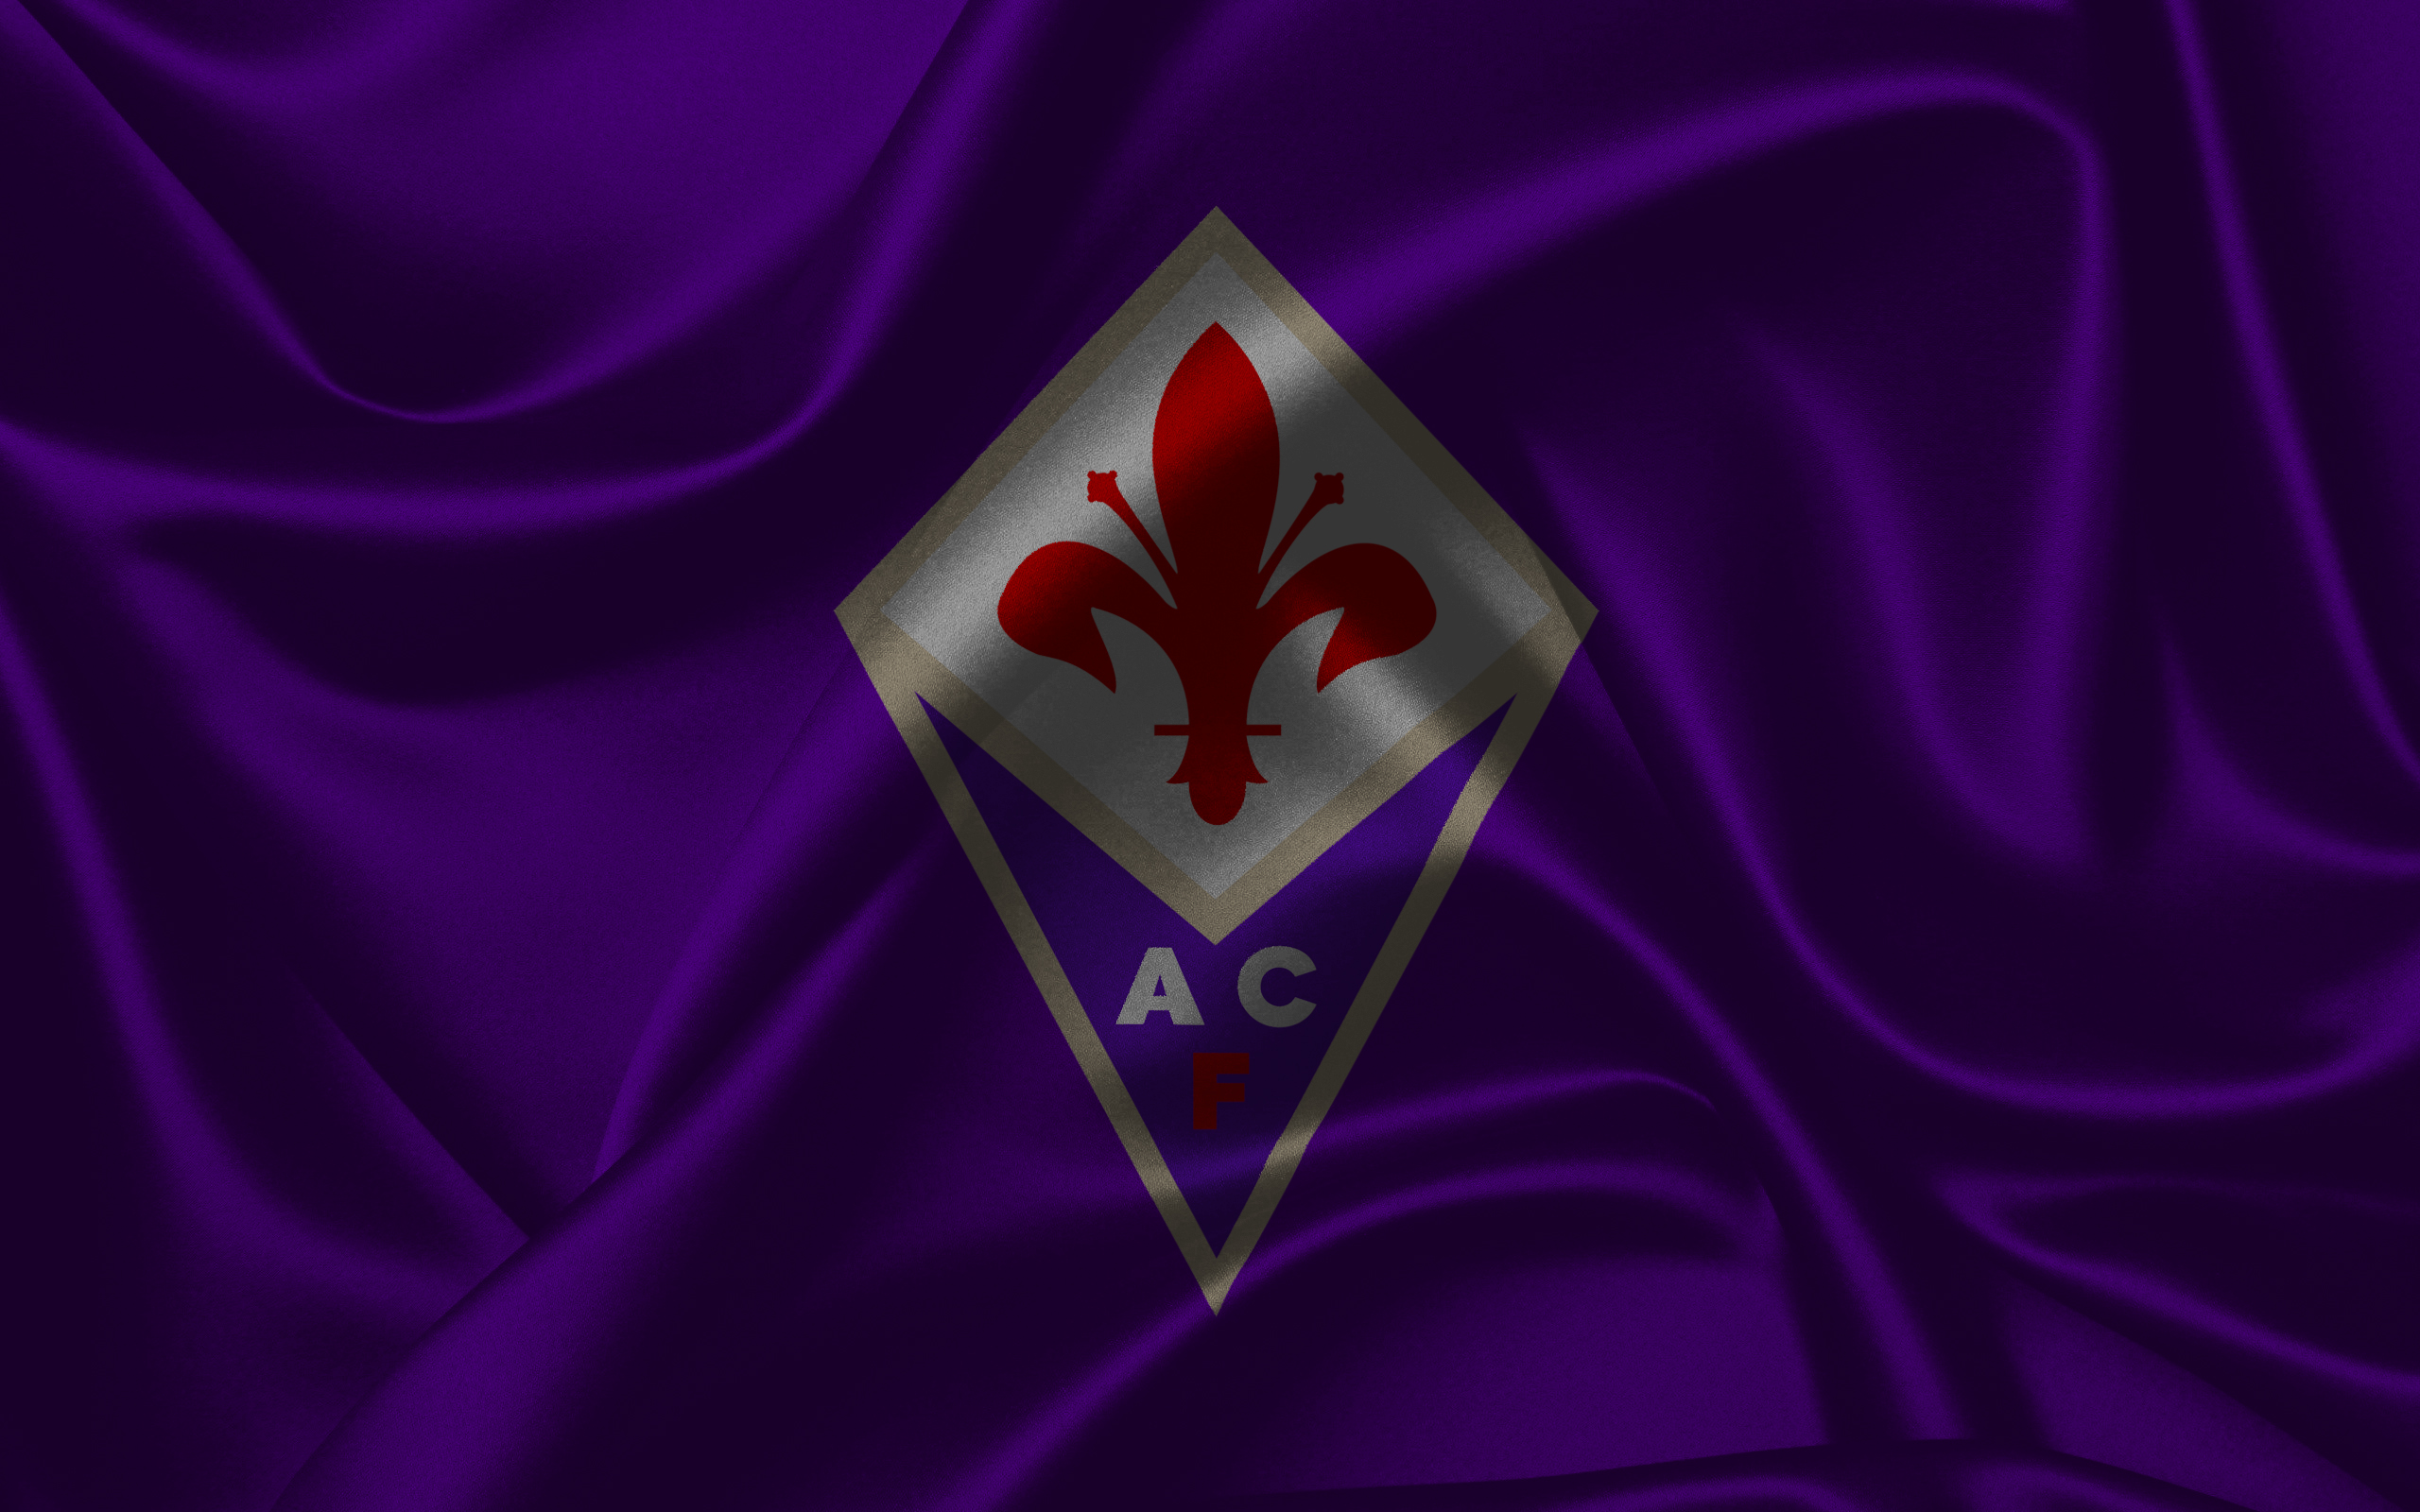 Acf Fiorentina HD Wallpaper Background Image